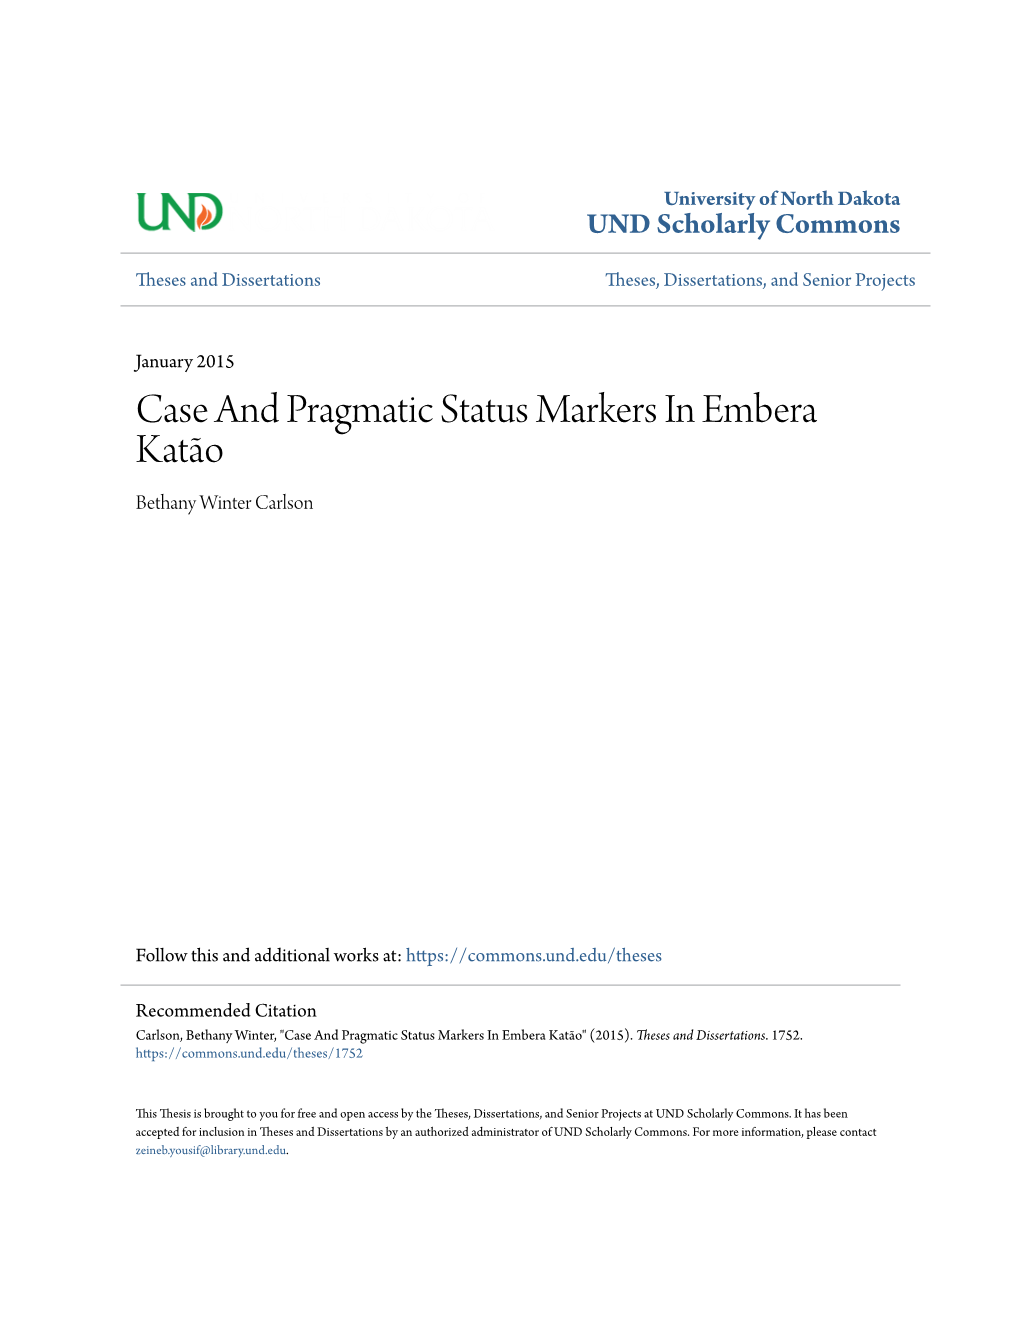 Case and Pragmatic Status Markers in Embera Katão Bethany Winter Carlson